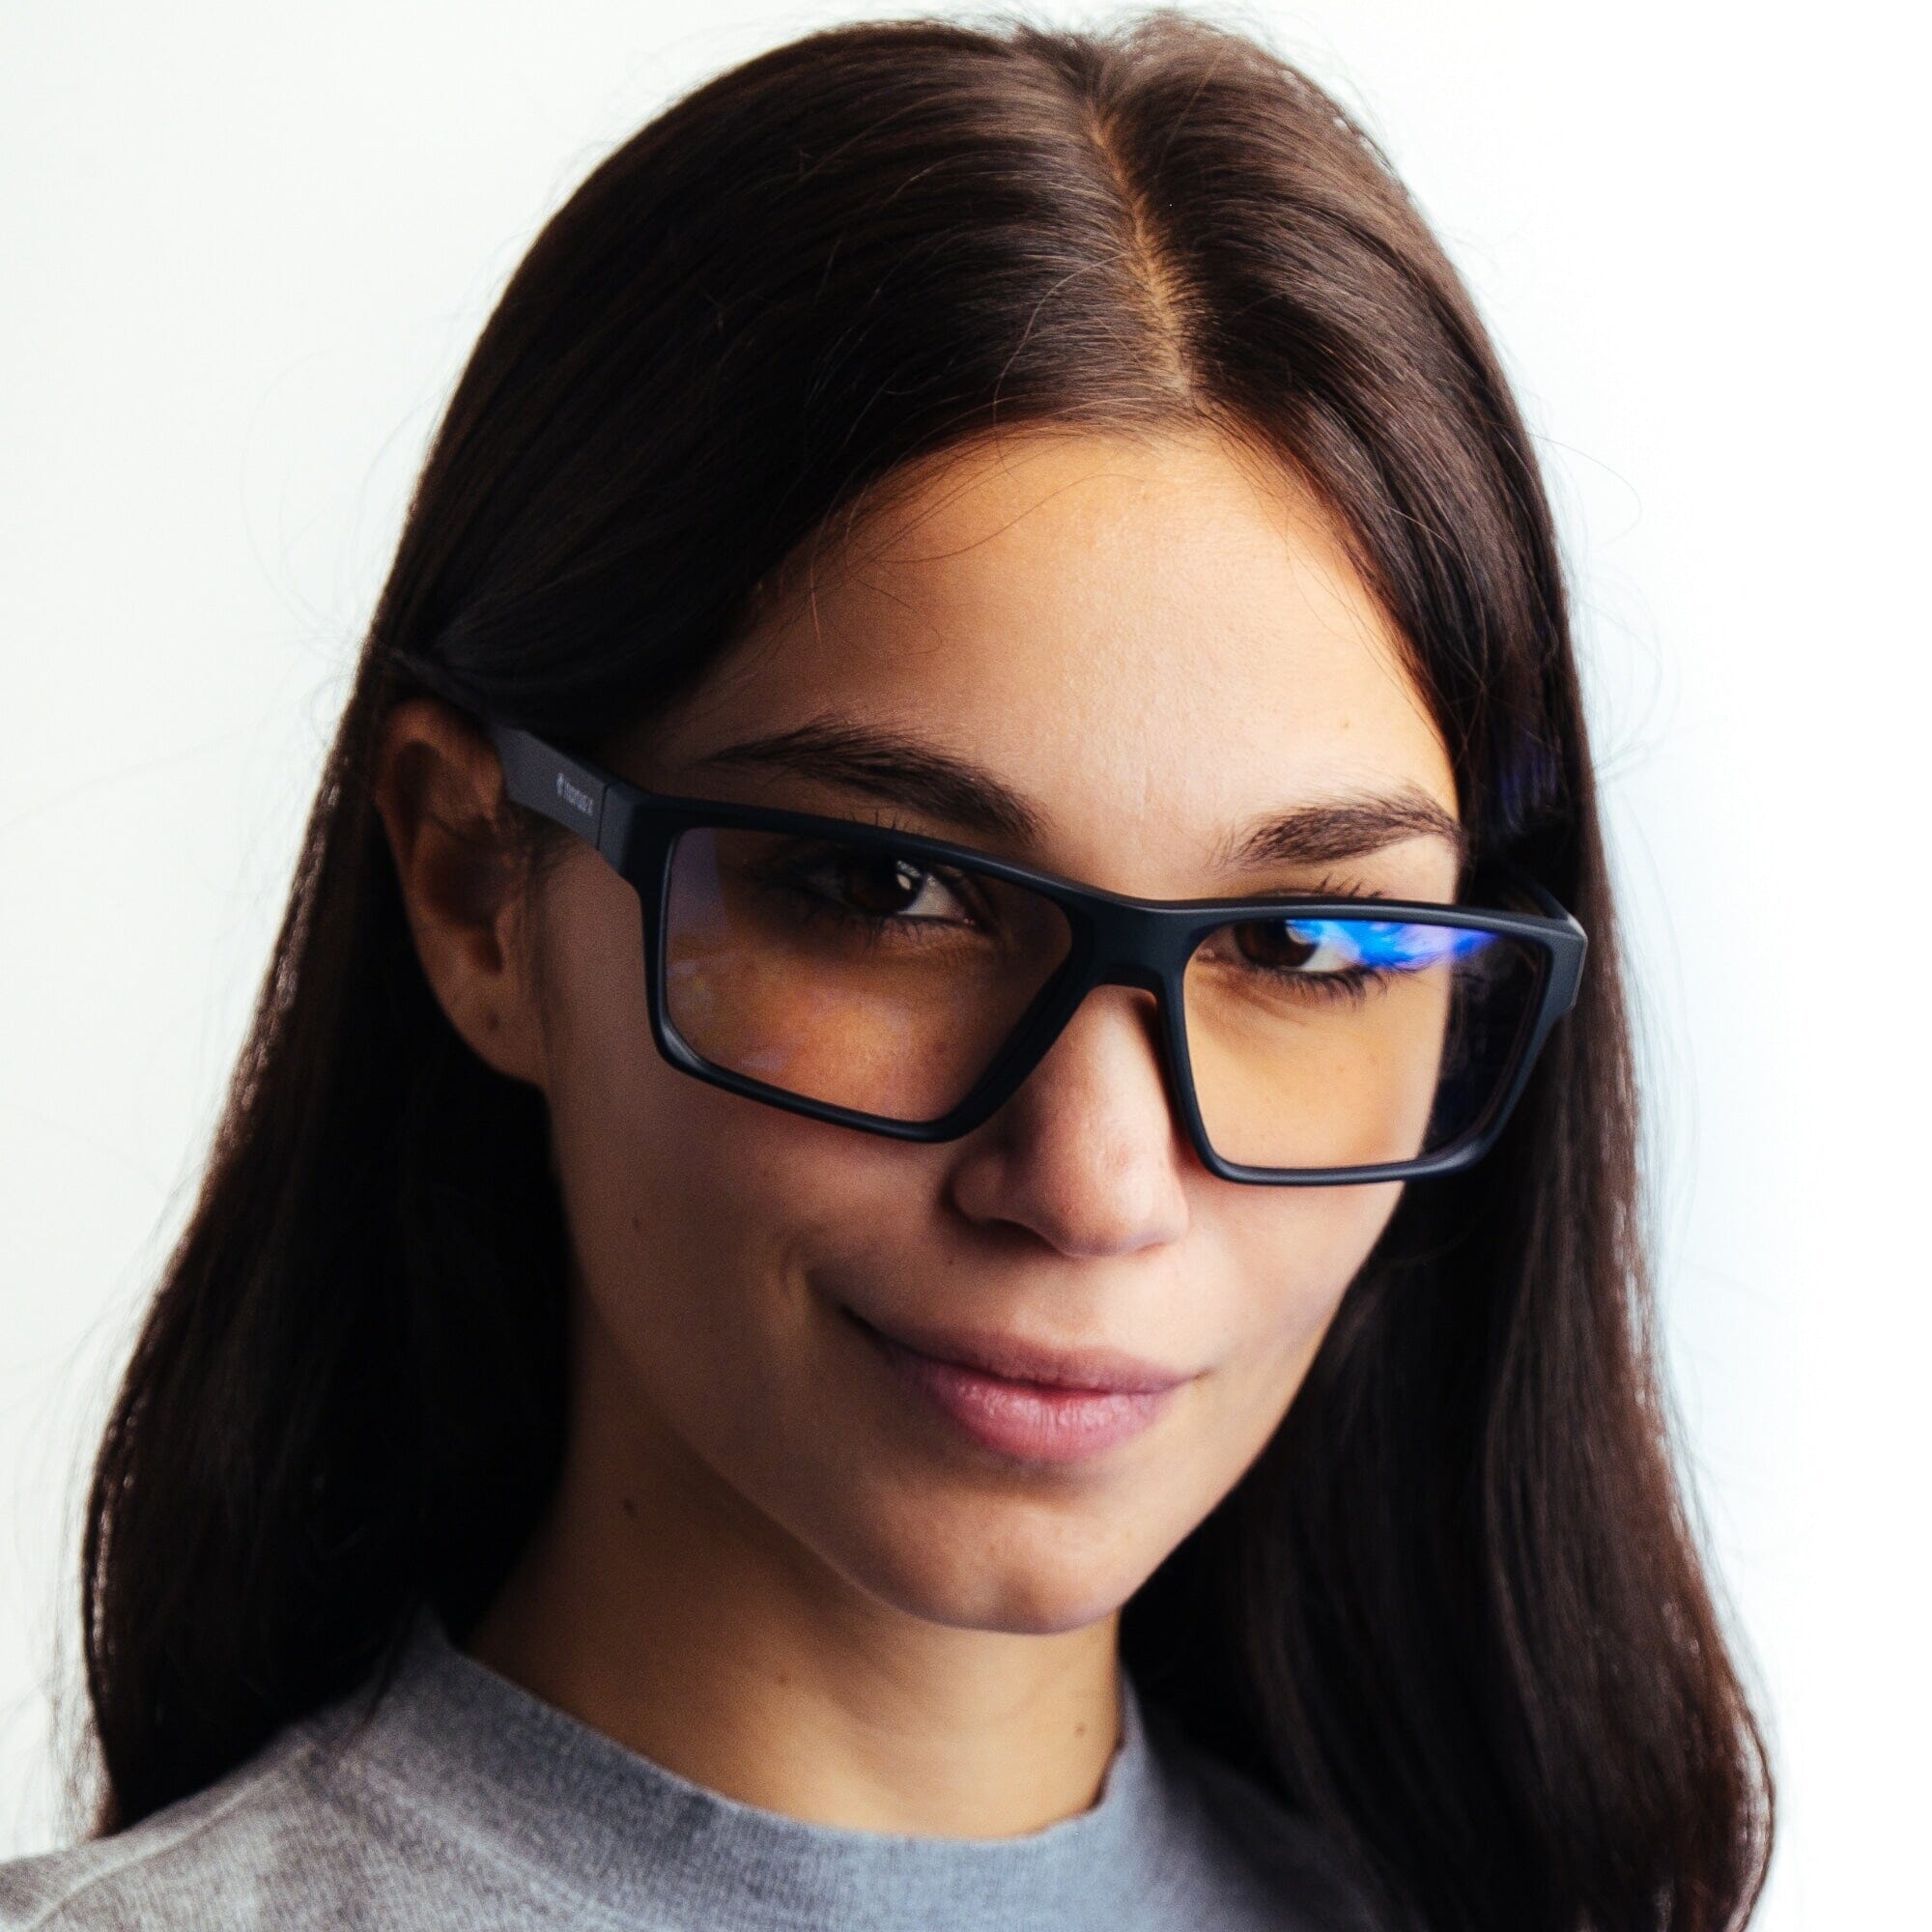 BlueX - Gafas para Gaming con Filtro de Luz Azul 100% - Relajantes